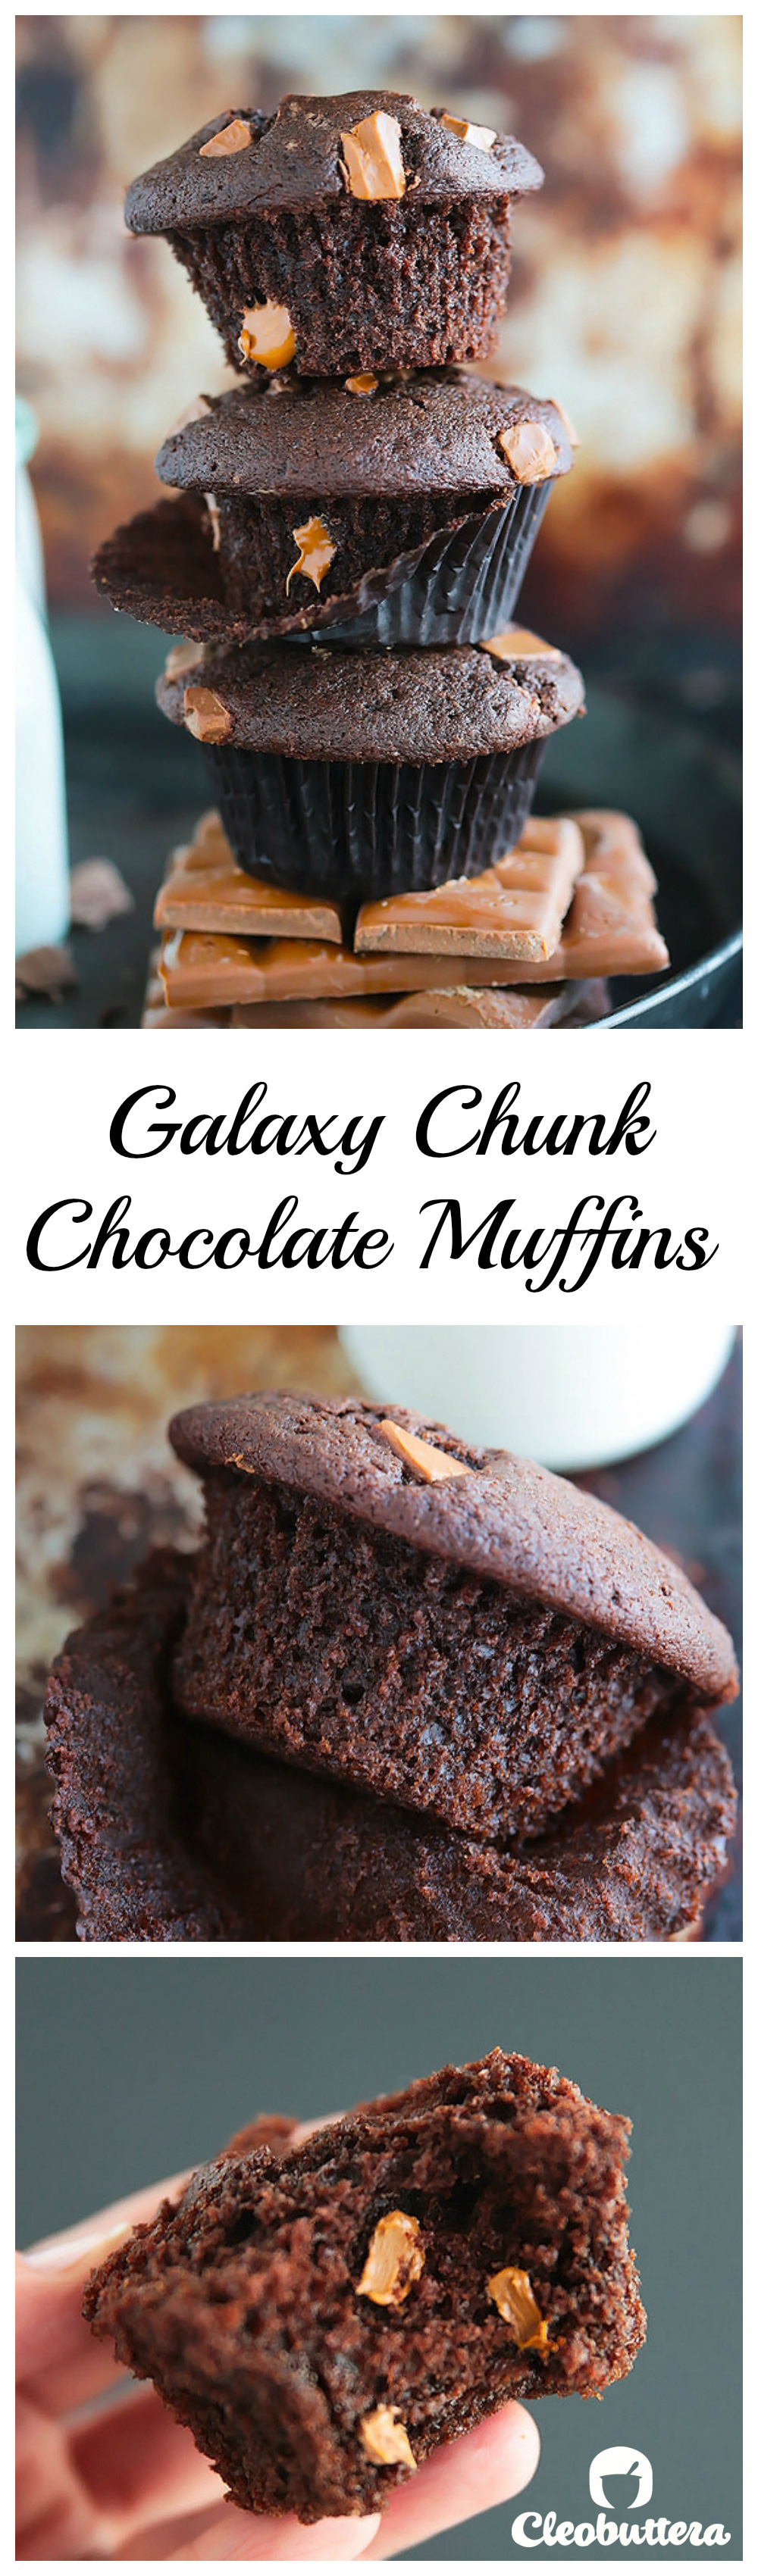 Galaxy Chunk Chocoalte Muffins - Pinterest